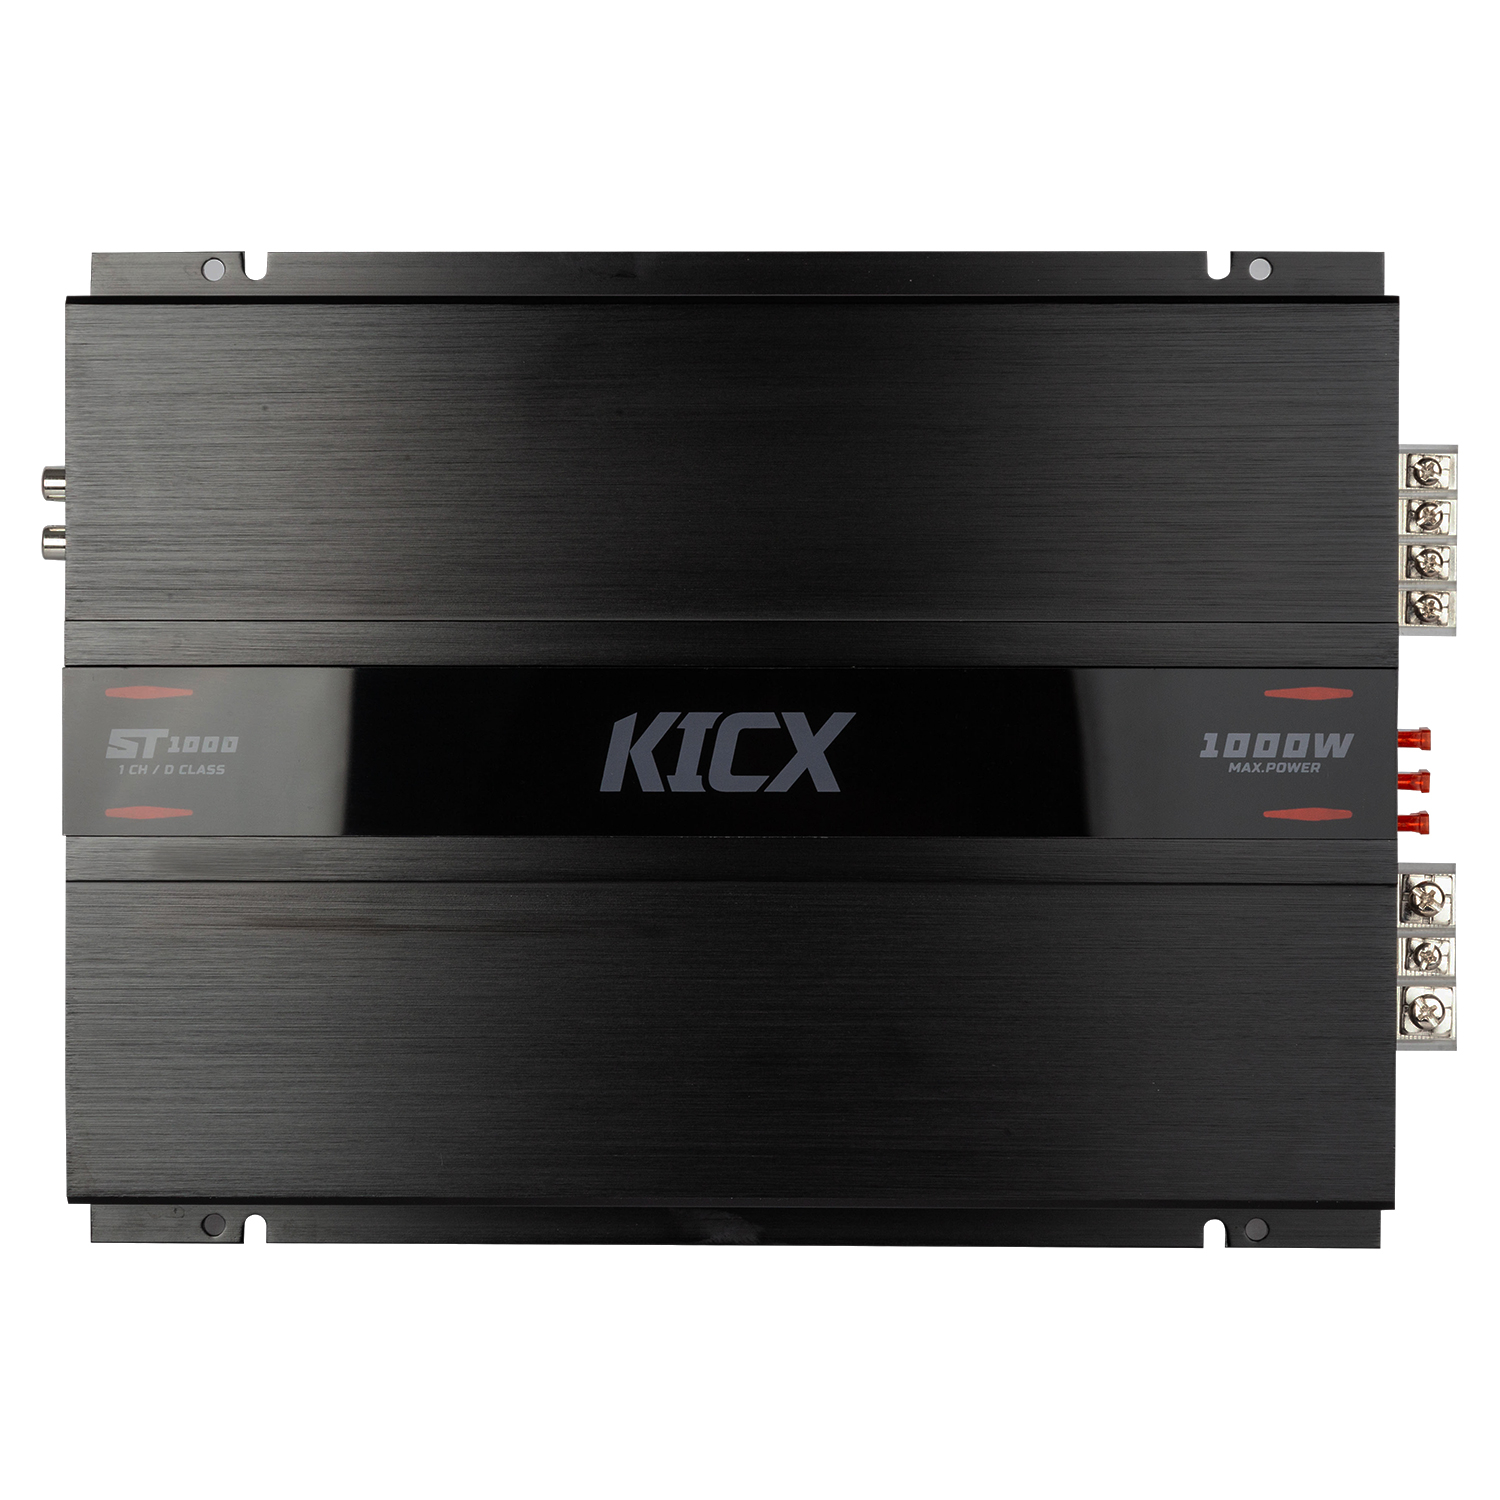 Kicx Kicx ST1000